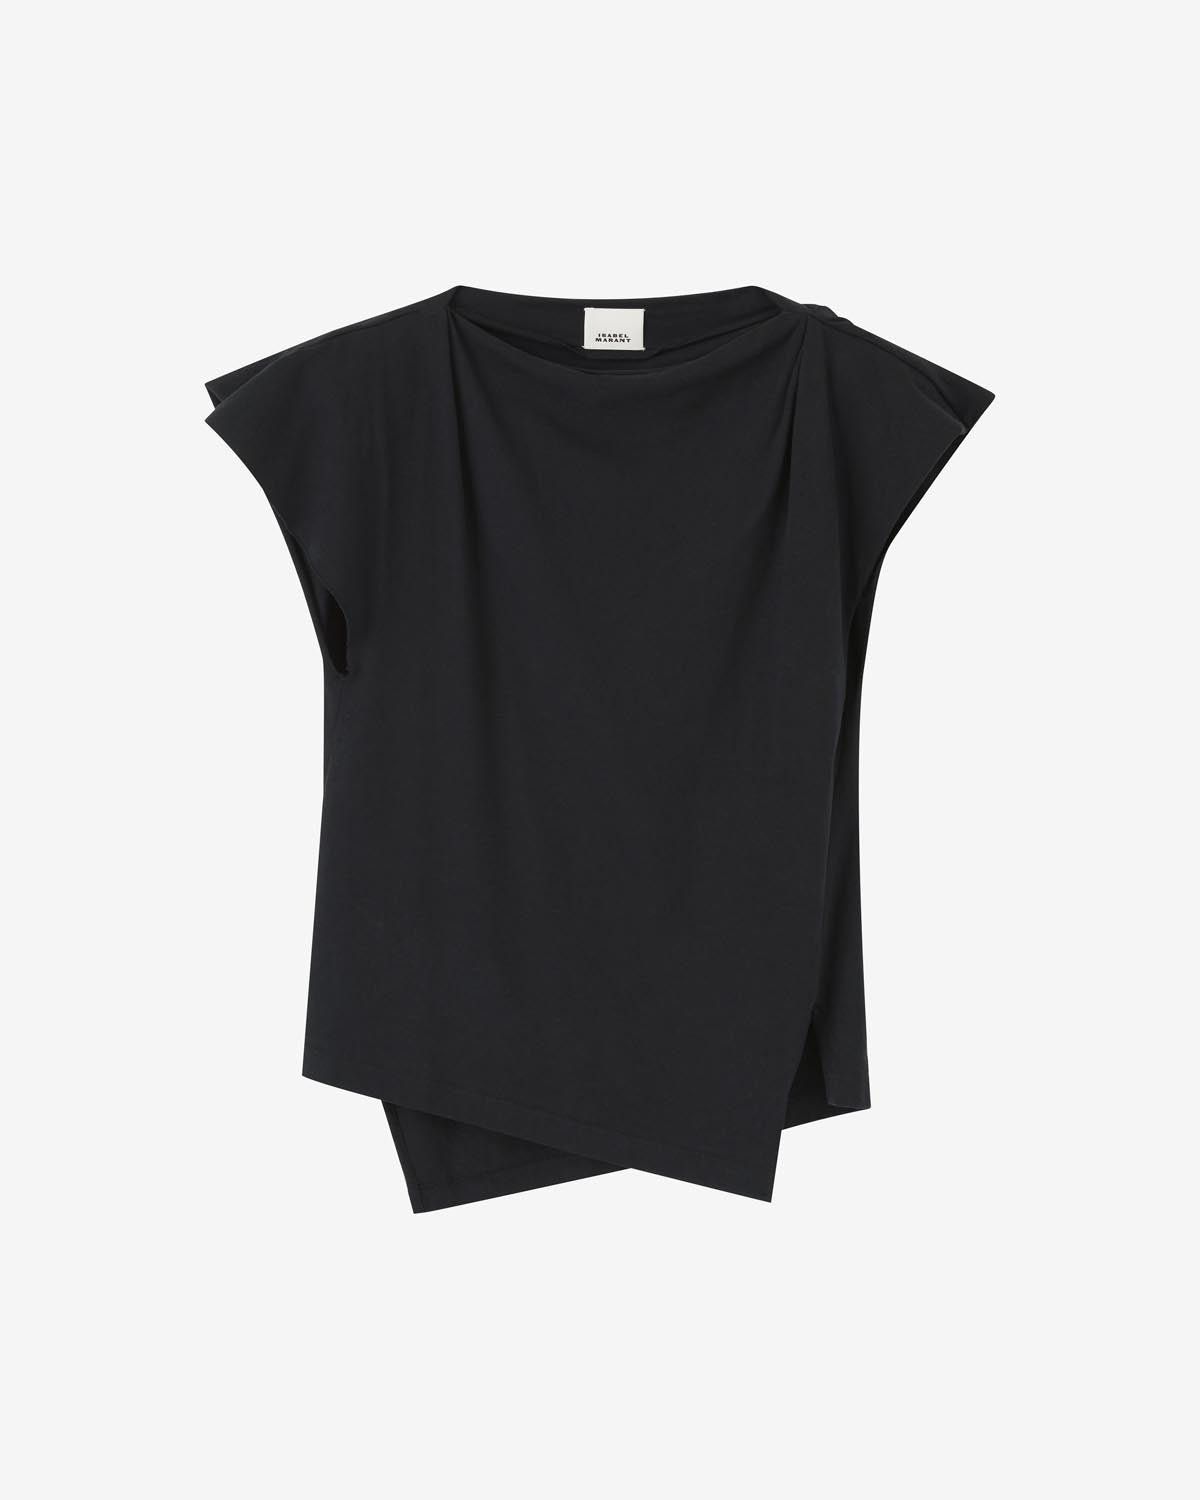 Sebani tee-shirt Woman Black 1